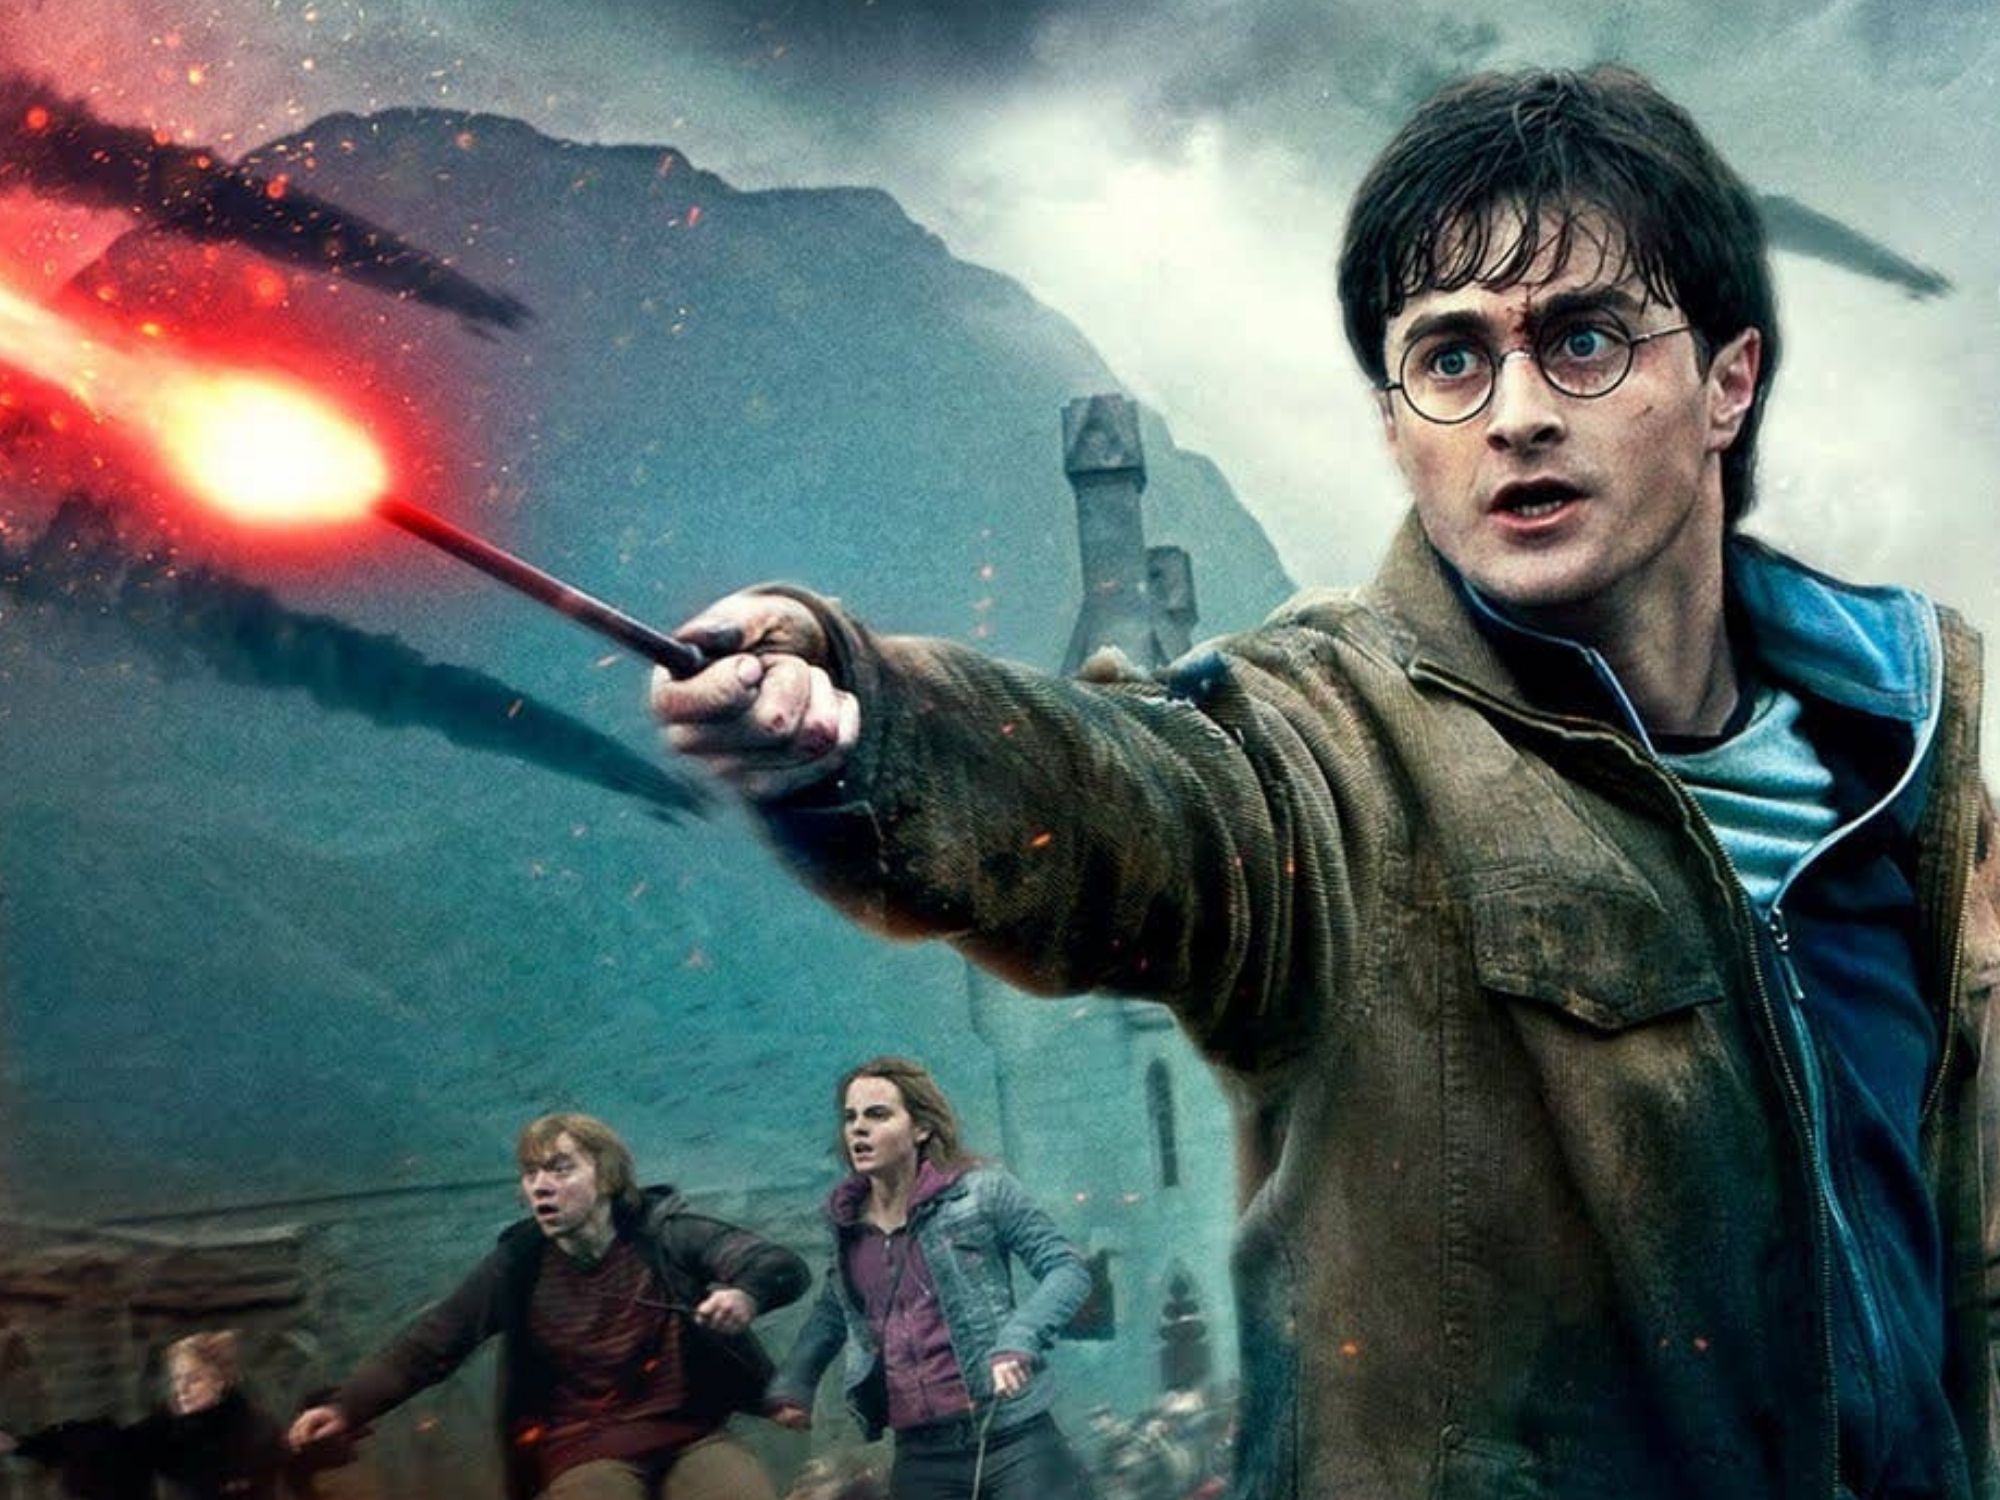 Image [Full Movie]♦: Image Film Harry Potter